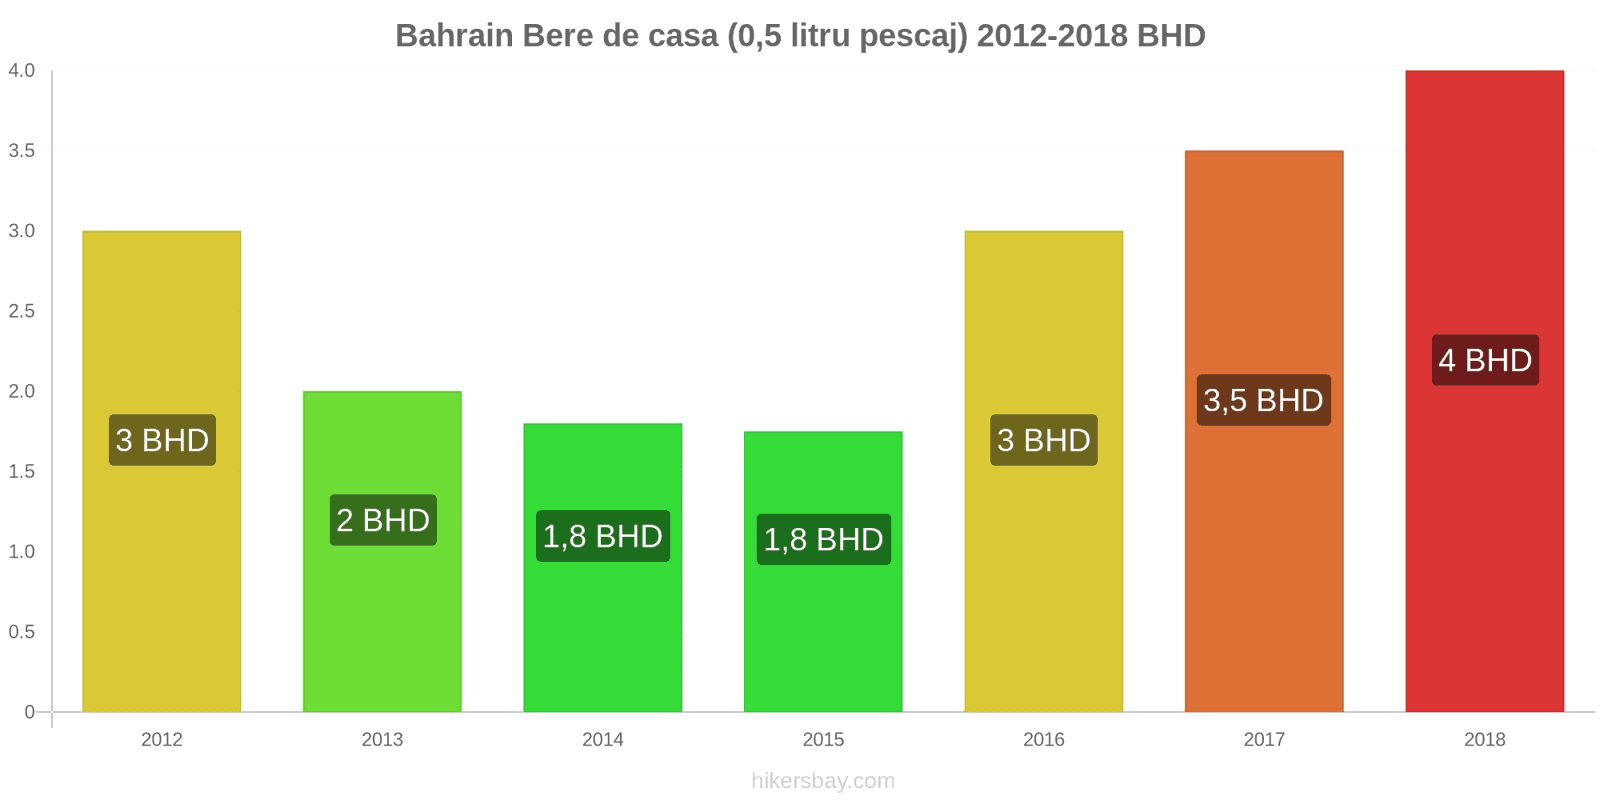 Bahrain schimbări de prețuri Bere la halbă (0,5 litri) hikersbay.com